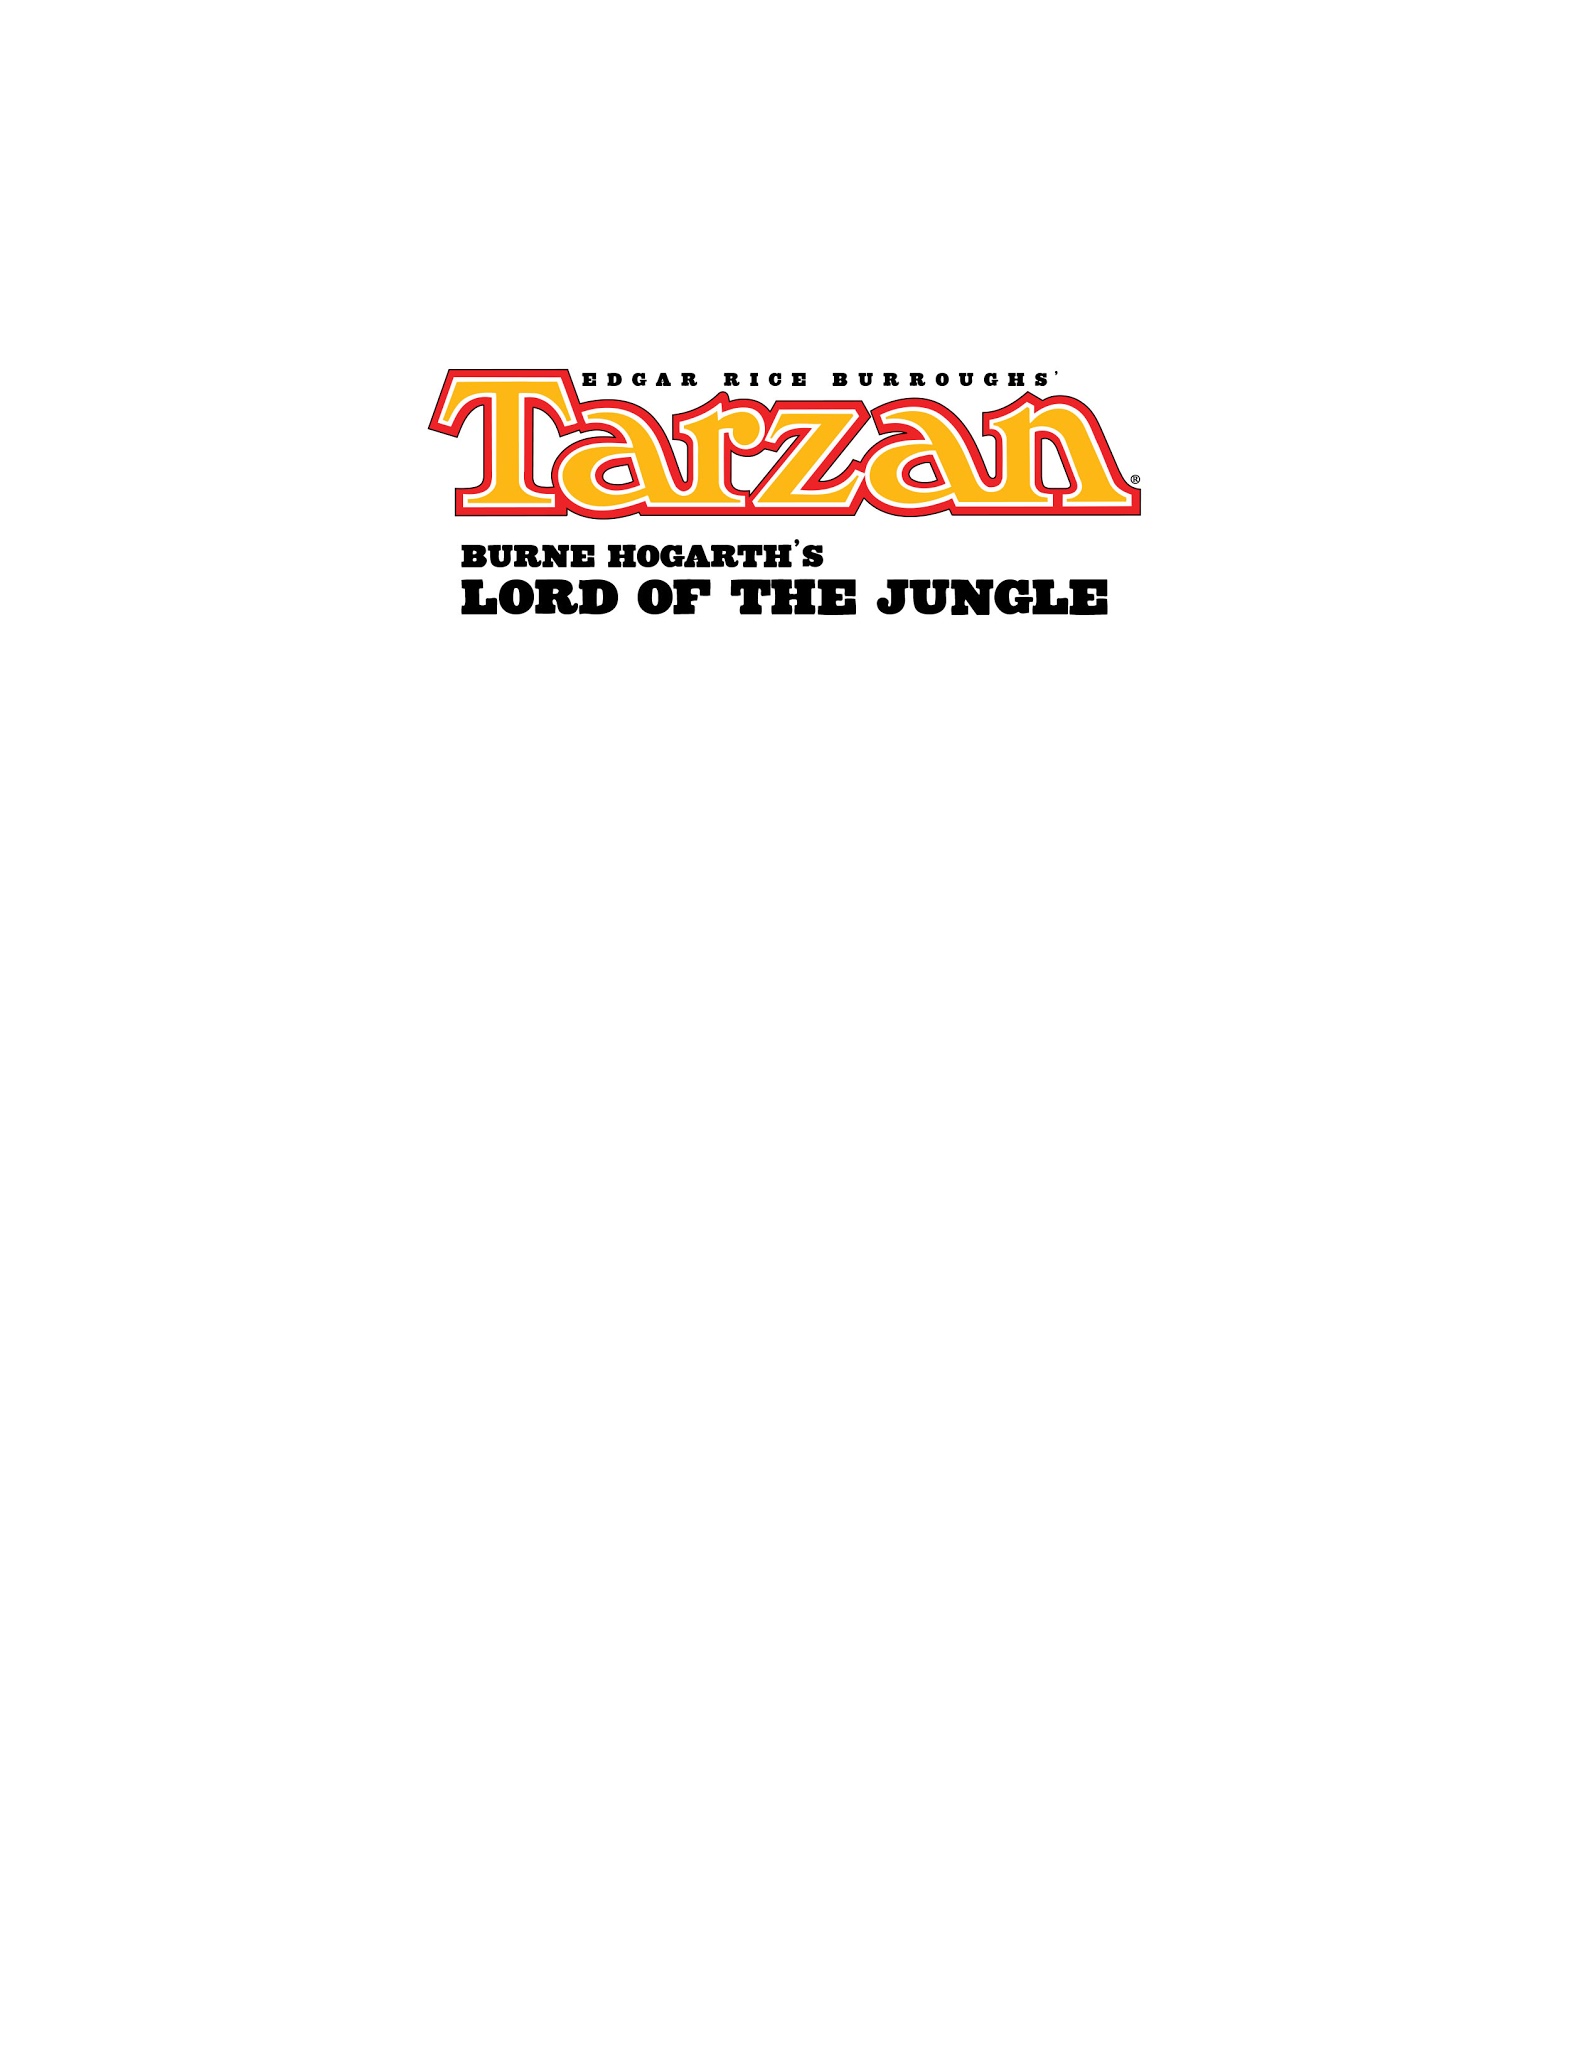 Read online Edgar Rice Burroughs' Tarzan: Burne Hogarth's Lord of the Jungle comic -  Issue # TPB - 3